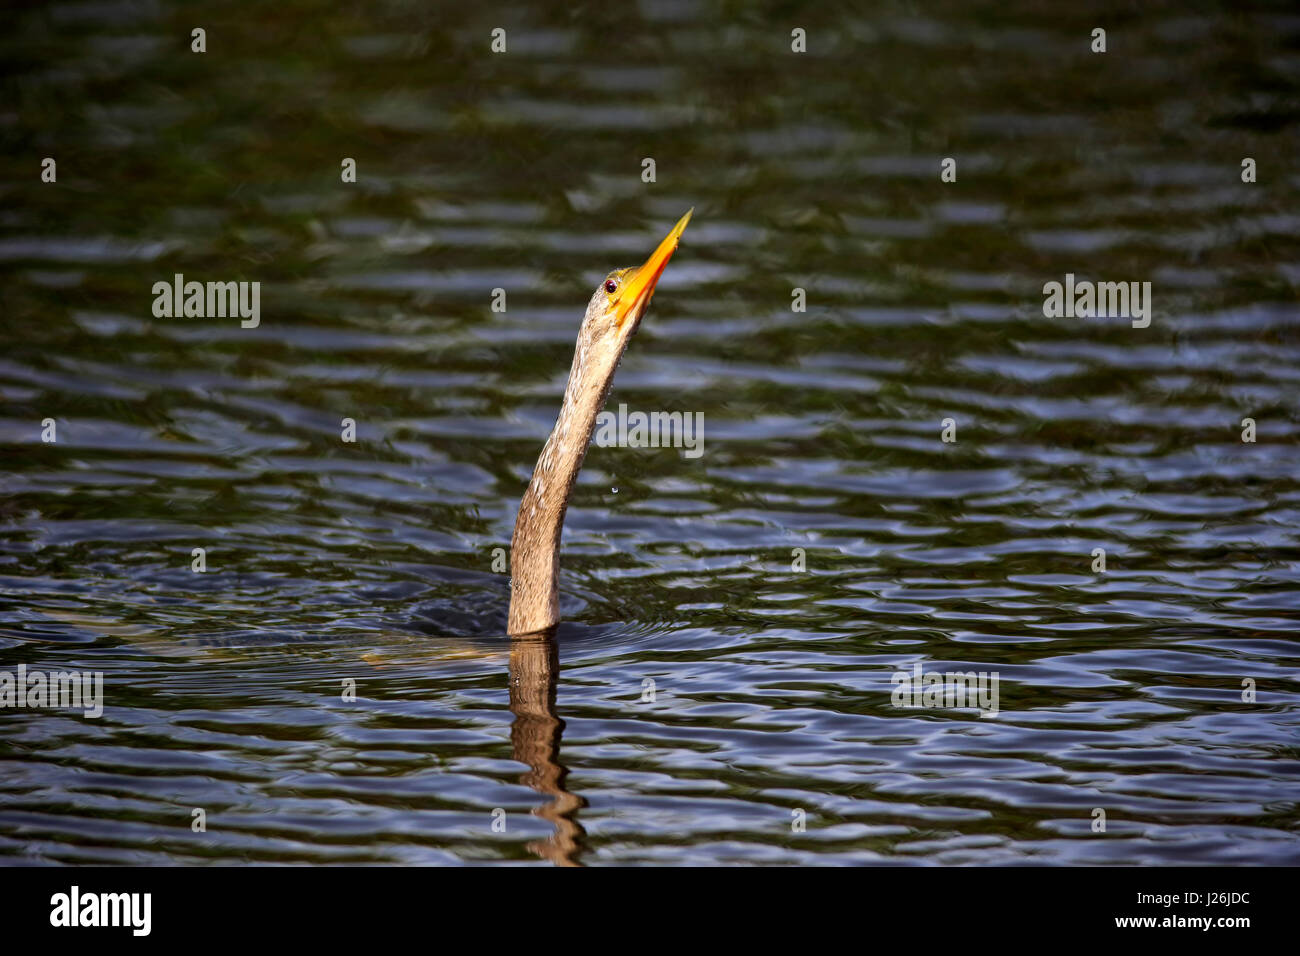 Snakebird (Anhinga anhinga), Adulto, grippaggio collo ouf acqua, food search, Wakodahatchee zone umide, Delray Beach, Florida, Stati Uniti d'America Foto Stock